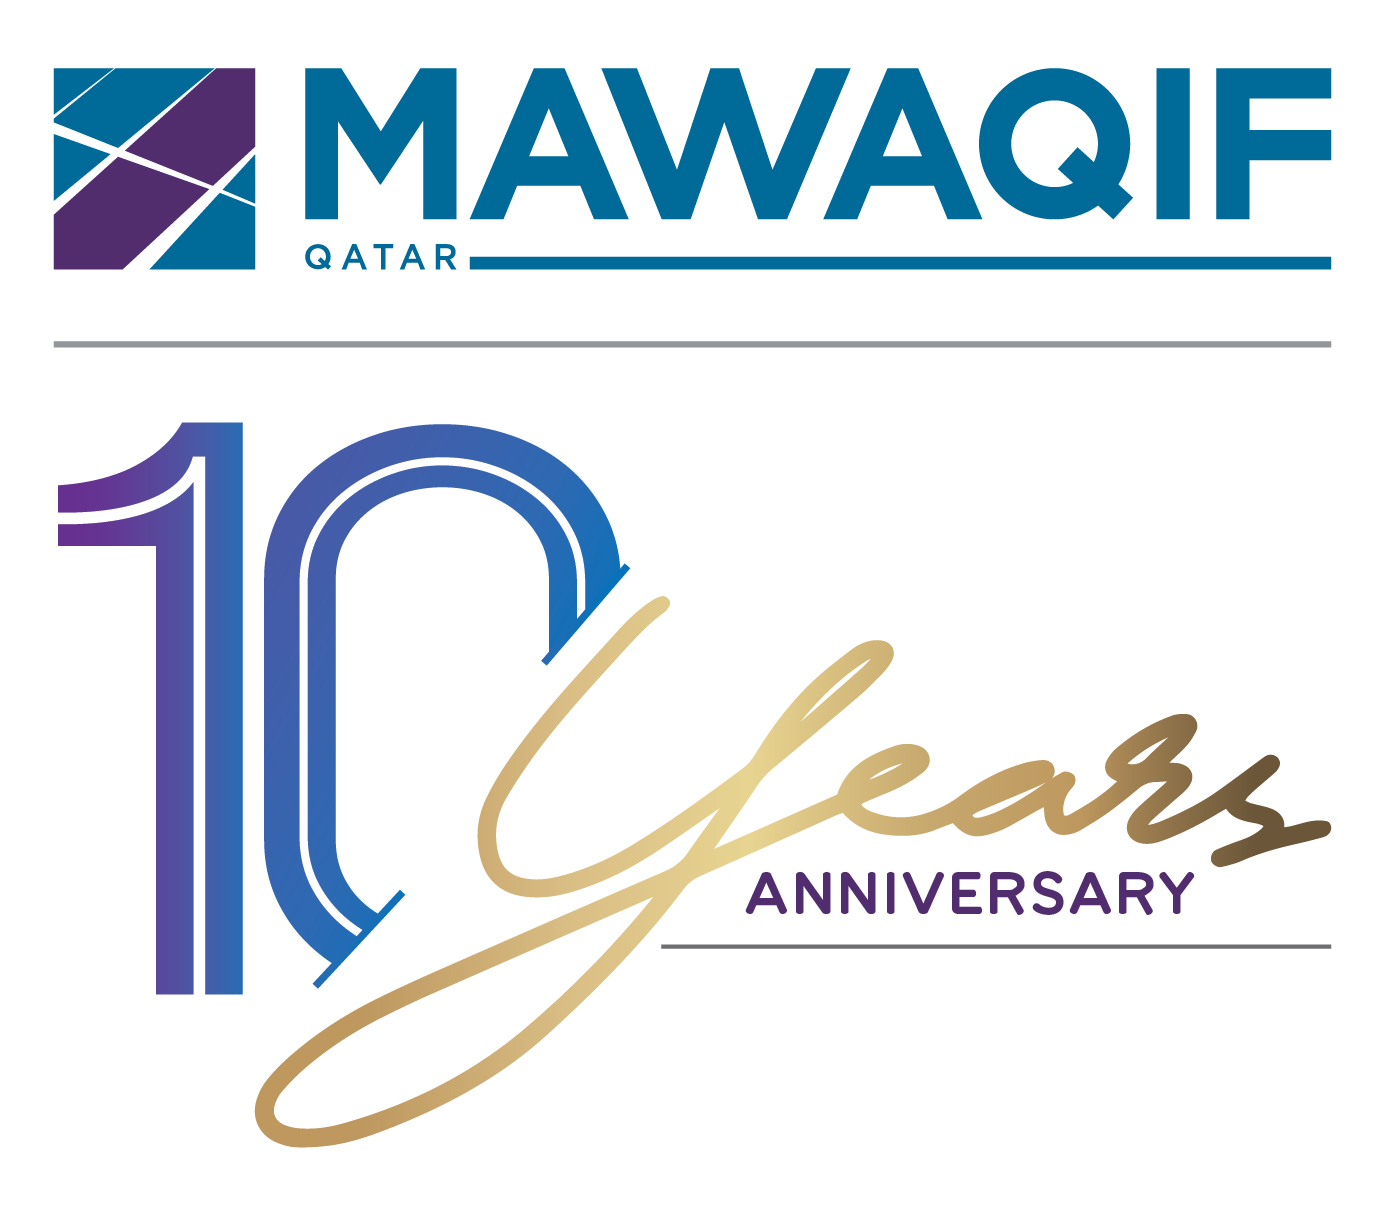 Mawaqif Qatar, by QDVP, is celebrating its 10 years anniversary